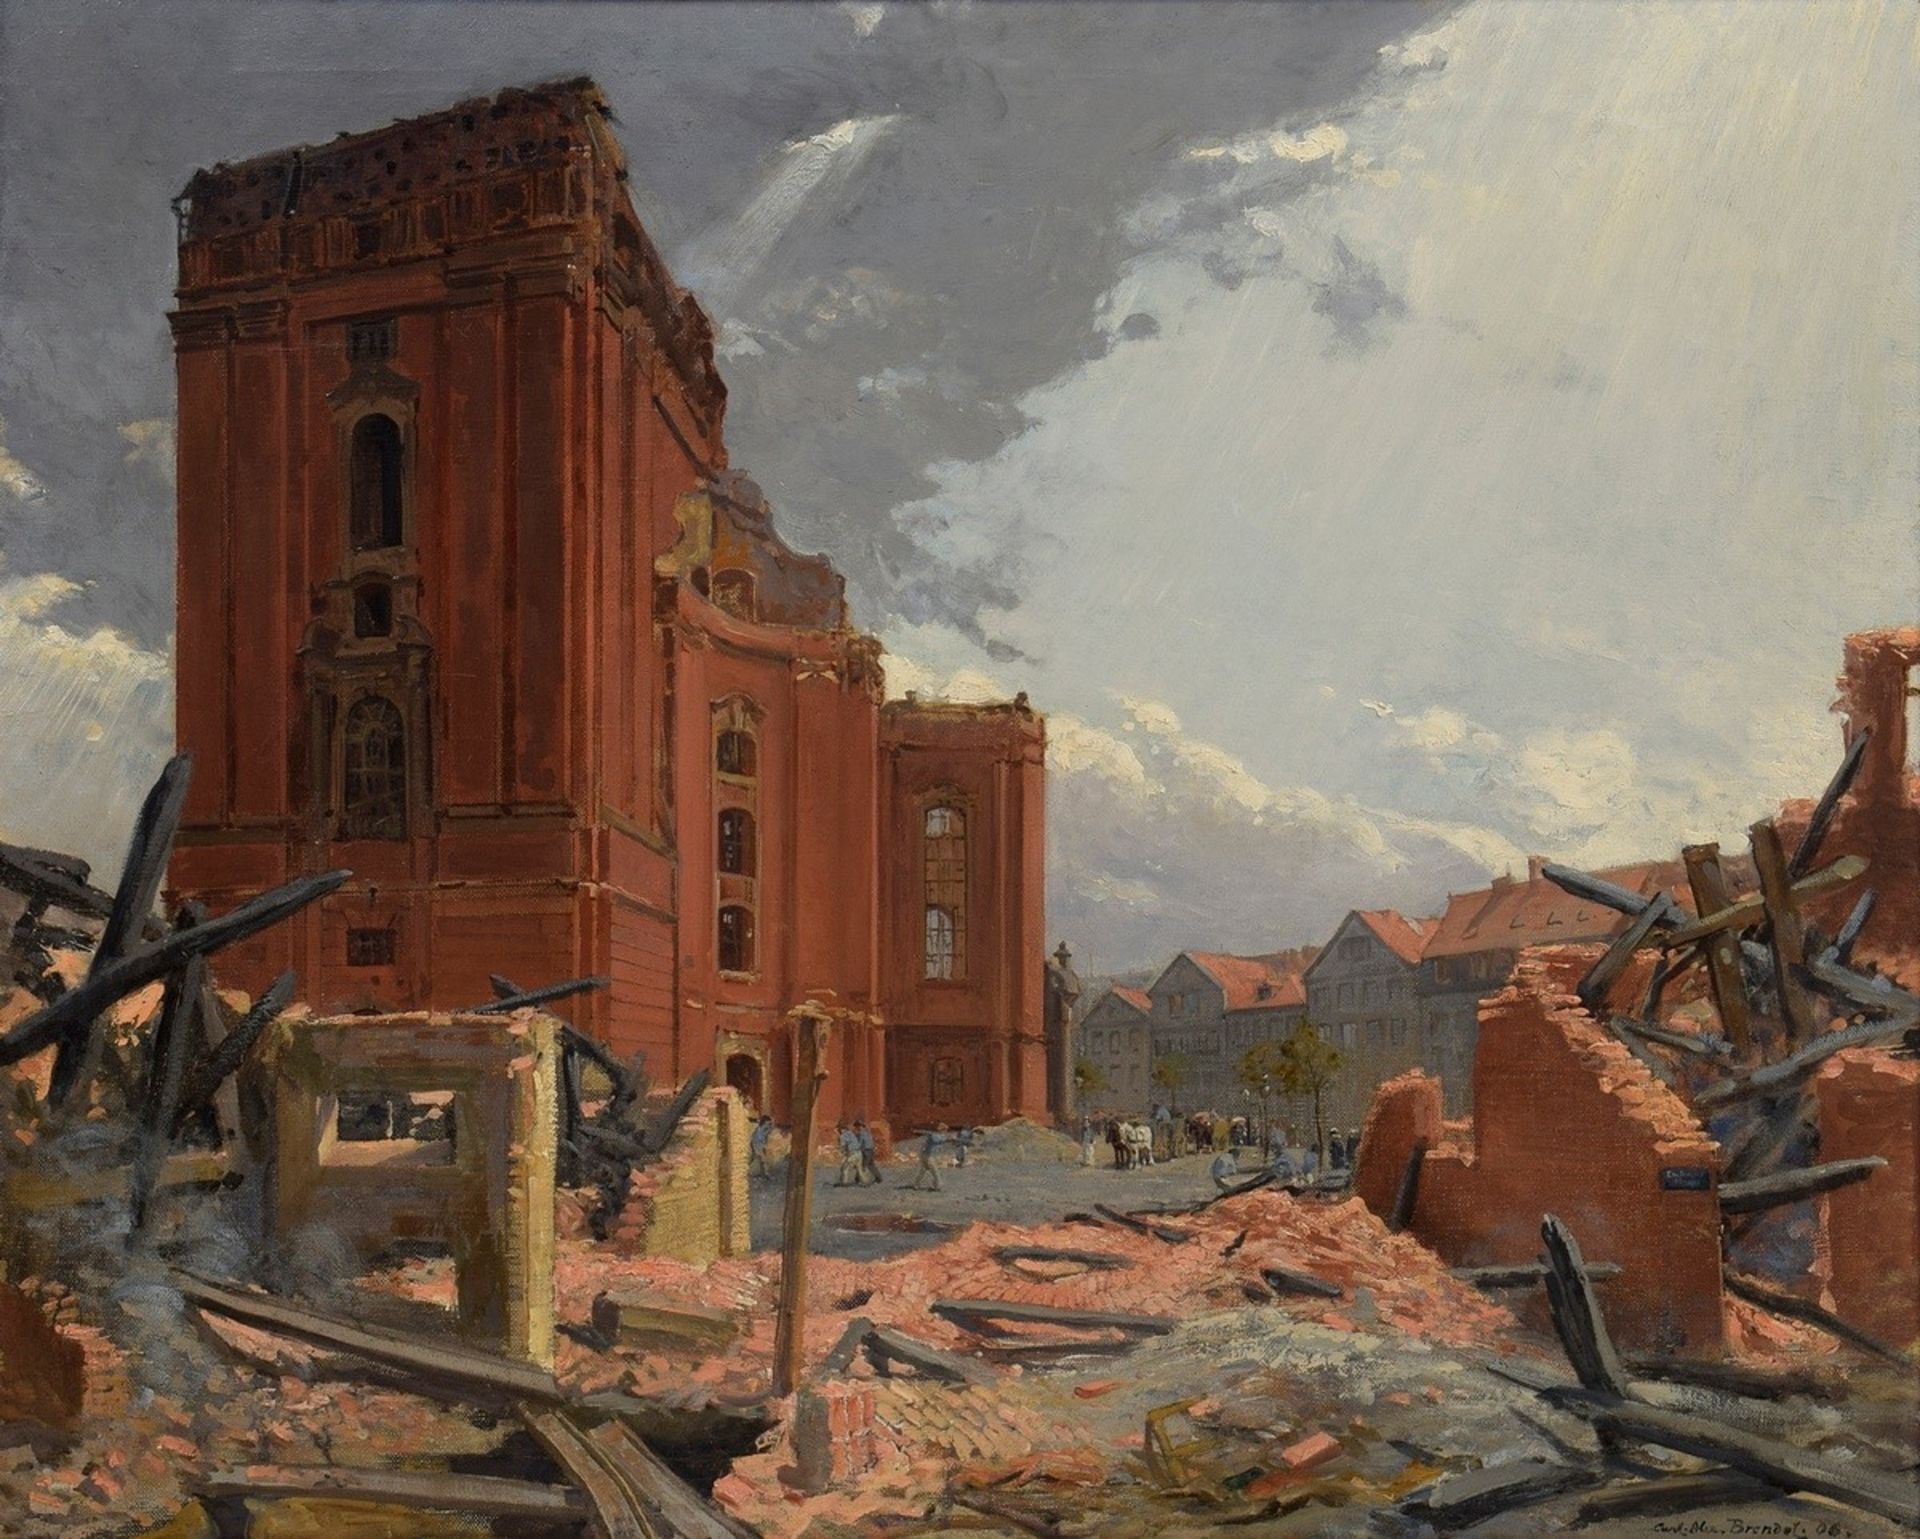 Brendel, Karl Alexander (1877-1945) "The ruins of Sankt Michaelis after the fire" 1906, oil/canvas 